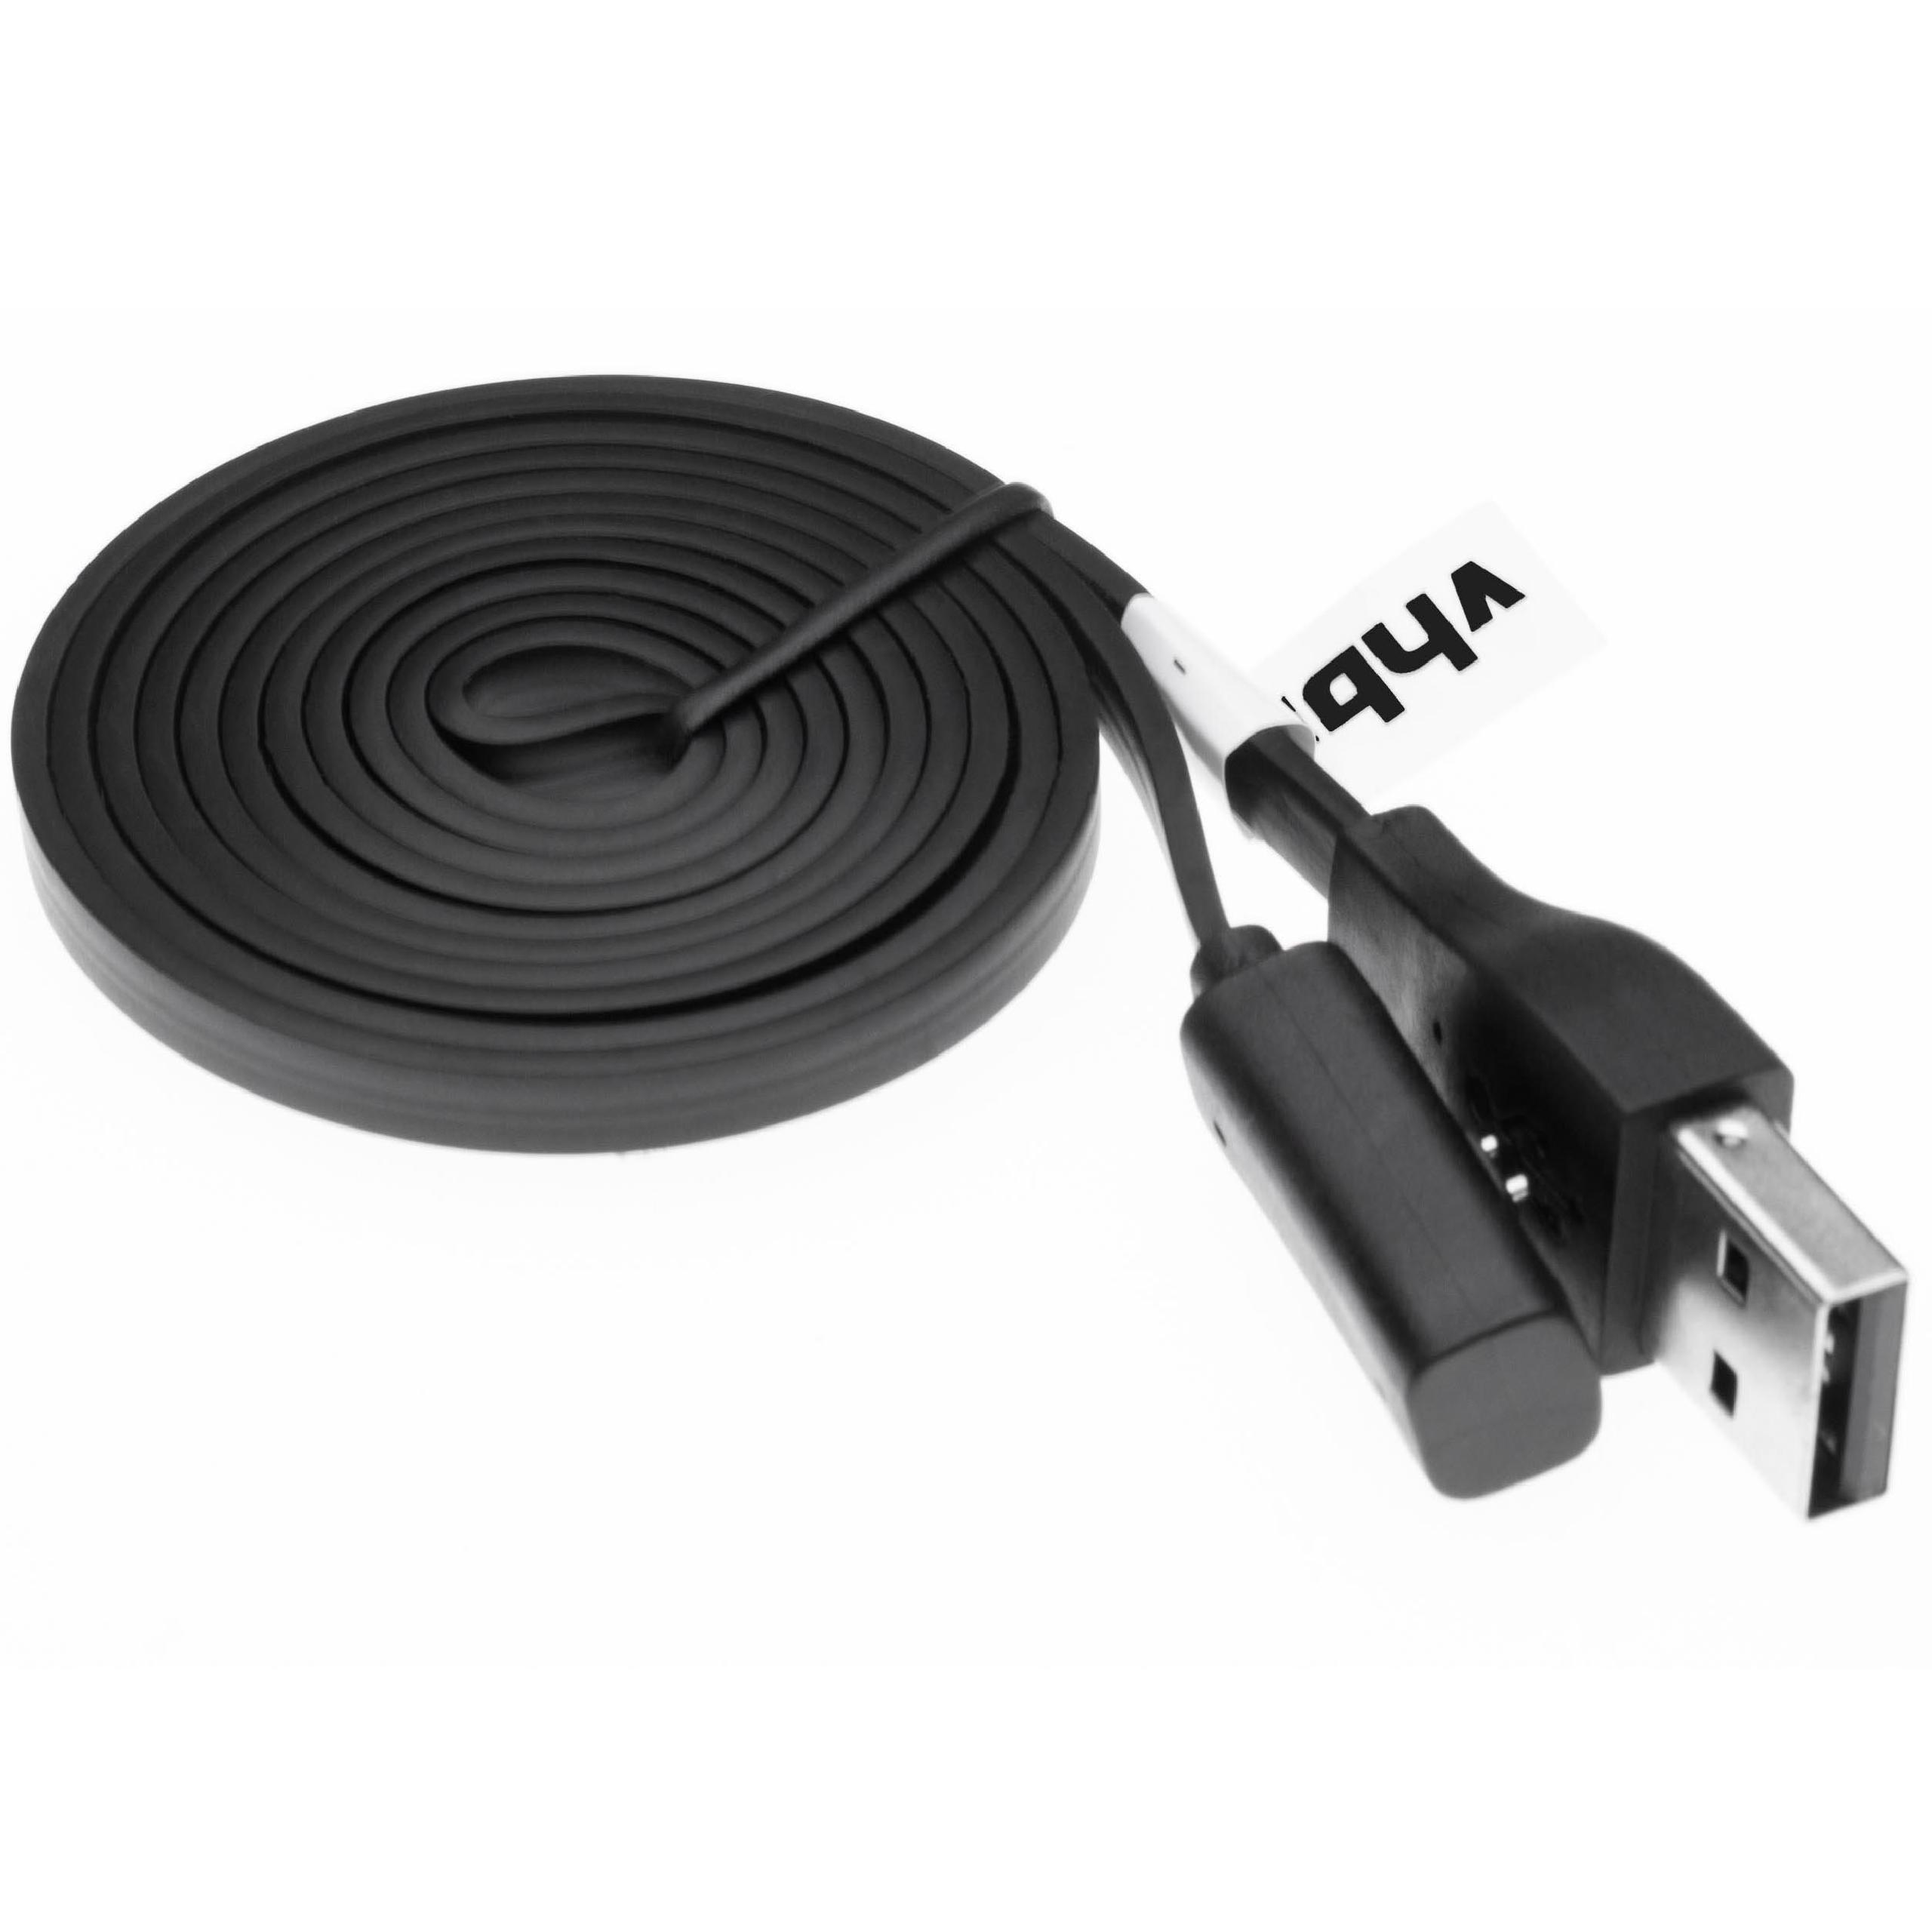 Cable de carga USB para smartwatch Pebble Time - negro 100 cm